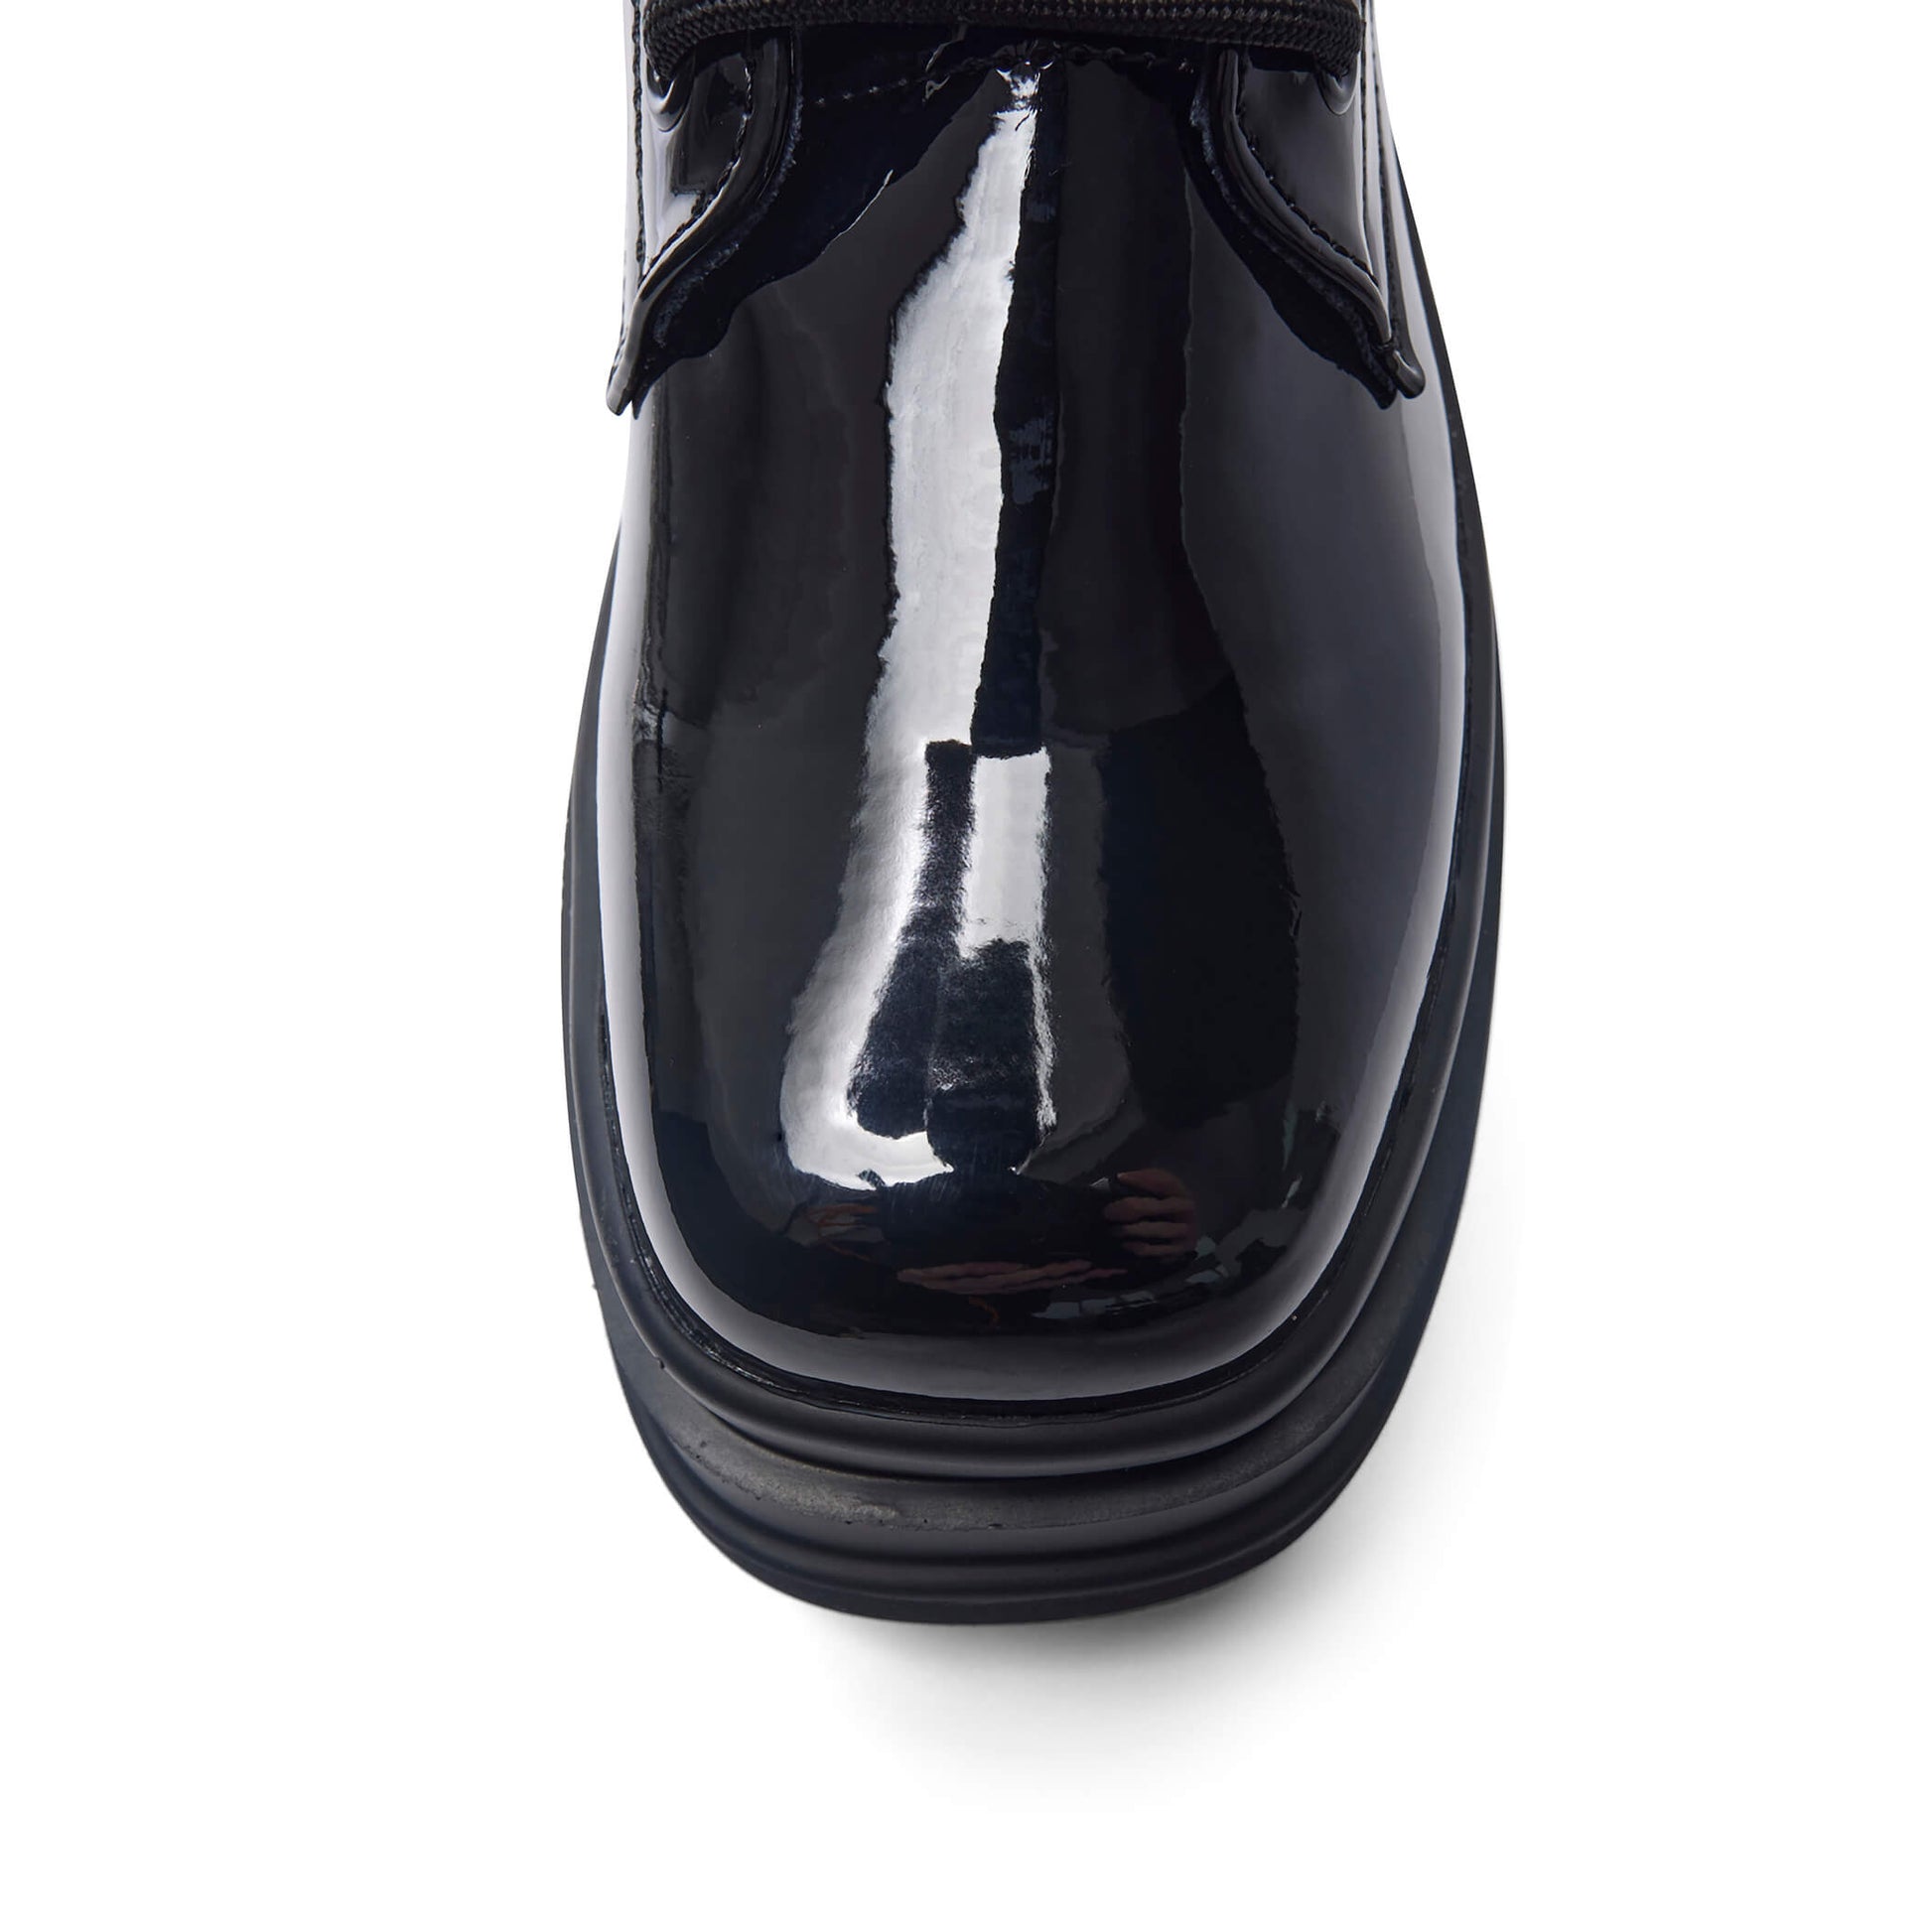 Deathwatch Trident Patent Platform Boots - Ankle Boots - KOI Footwear - Black - Top View